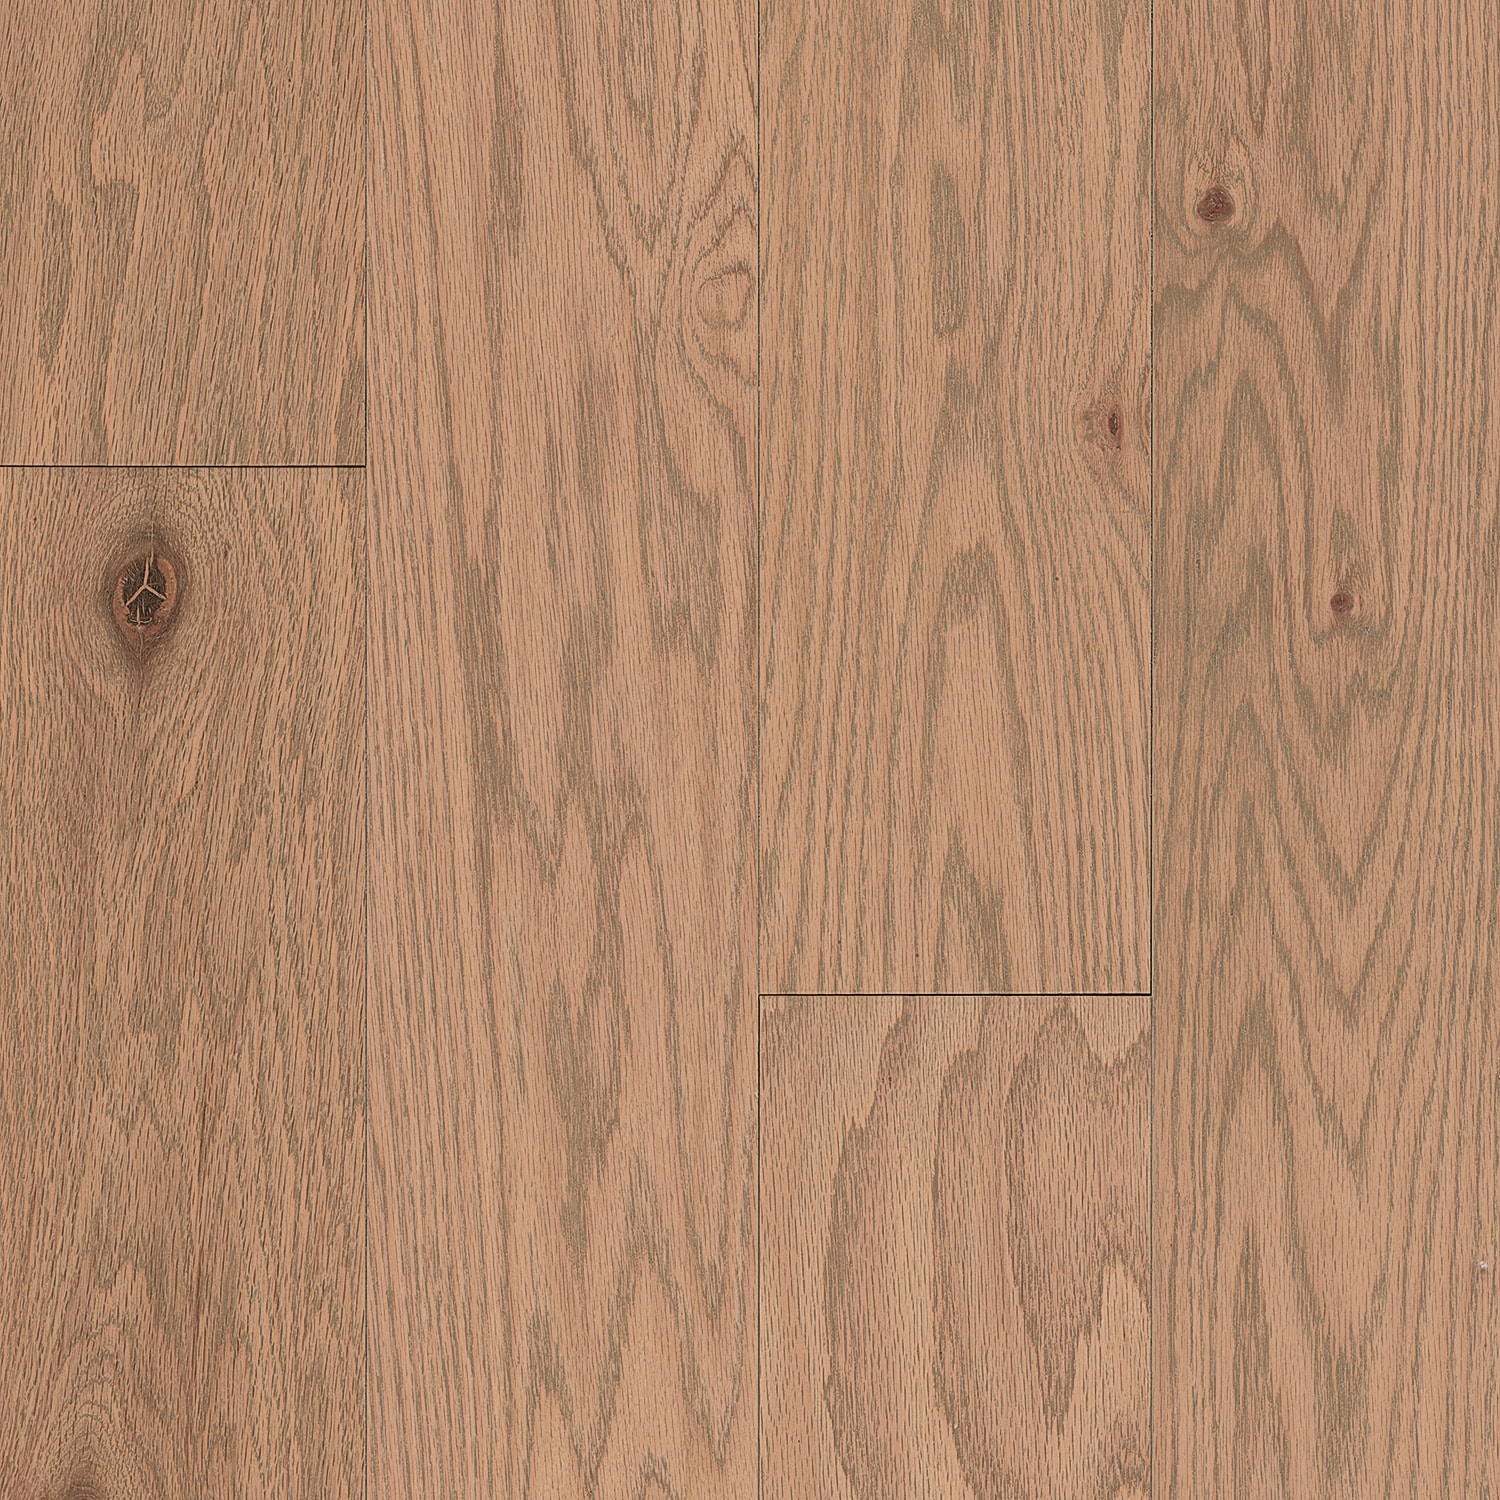 American natural hardwood floor